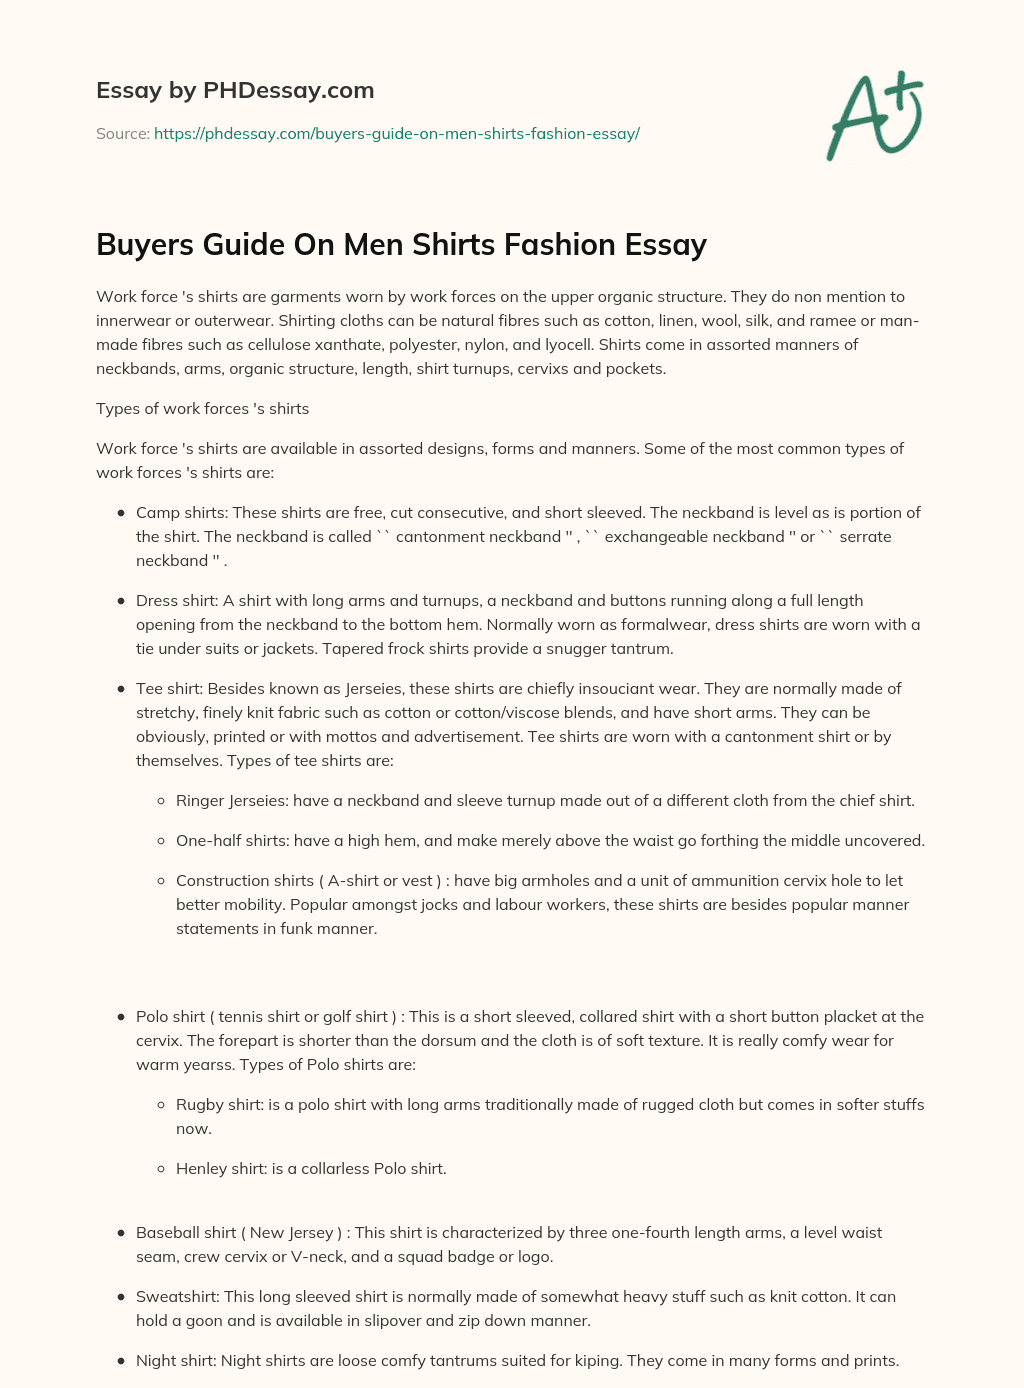 Buyers Guide On Men Shirts Fashion Essay - PHDessay.com